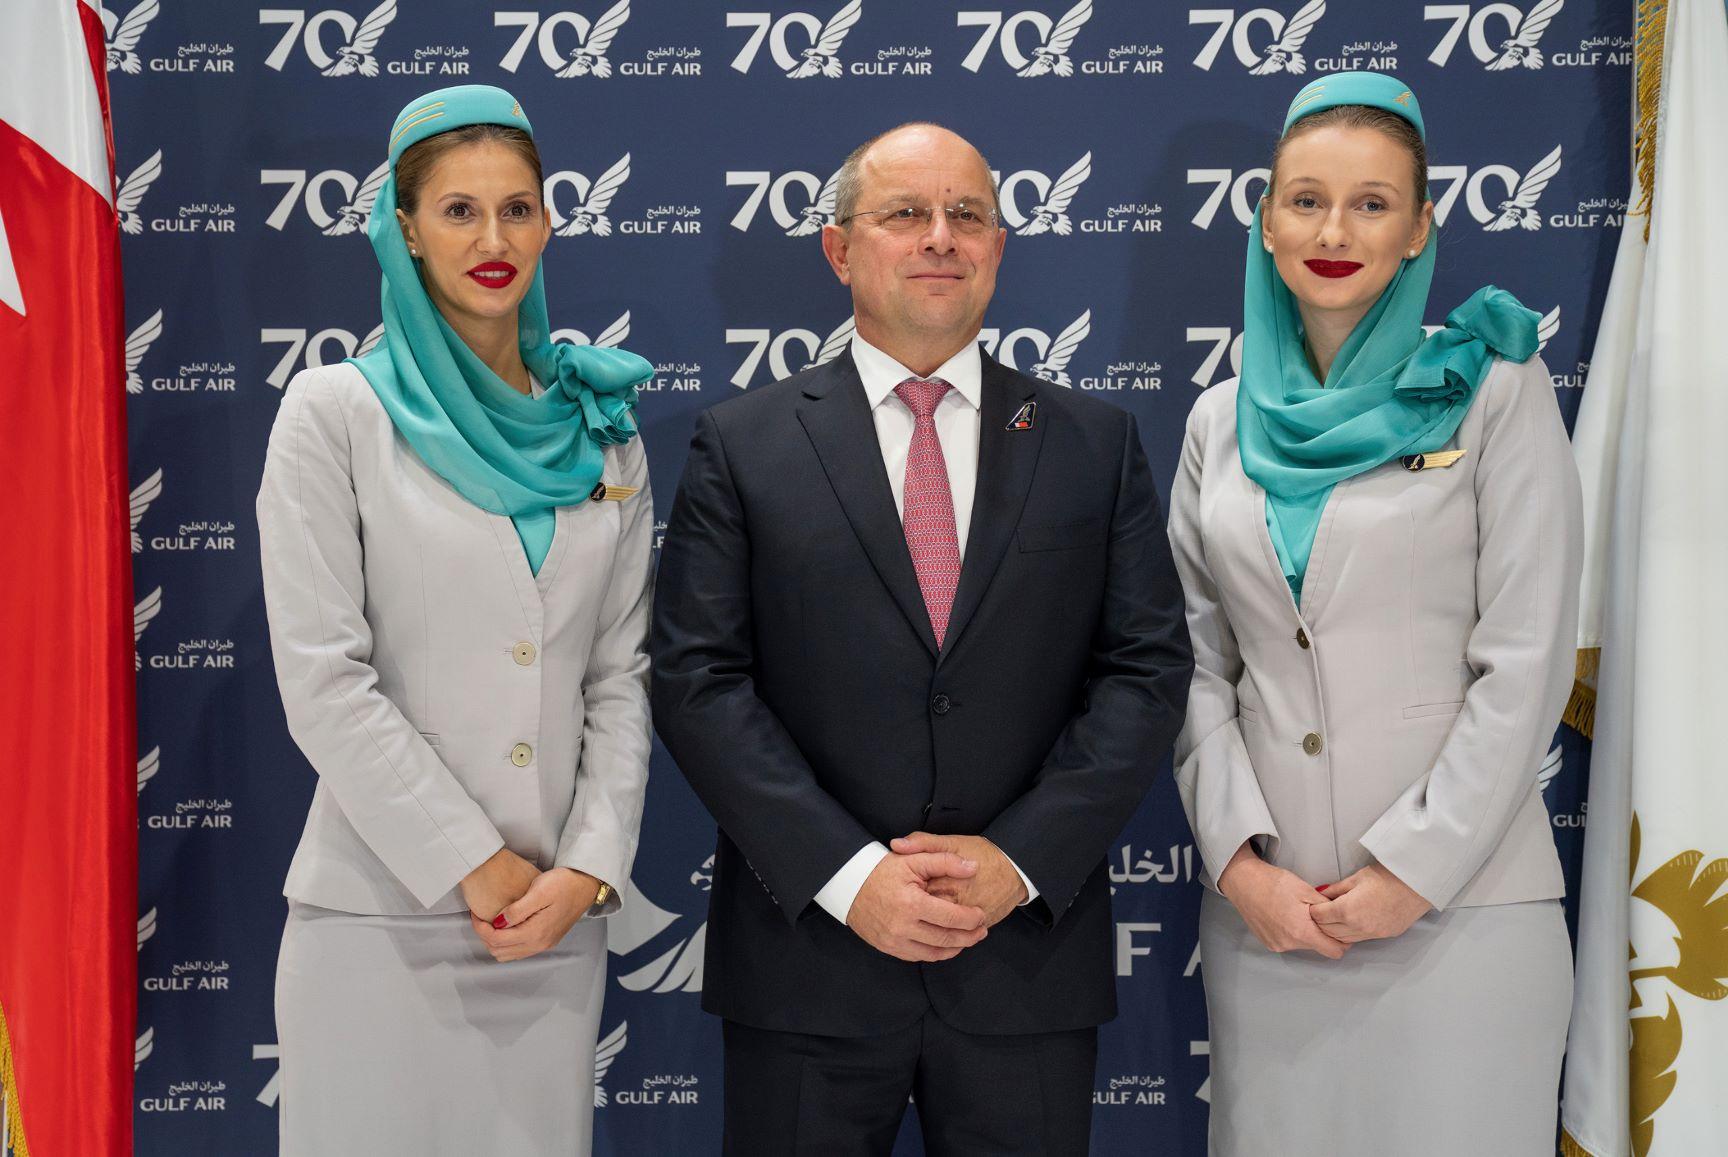 Gulf Air CEO Kresimir Kucko 2019